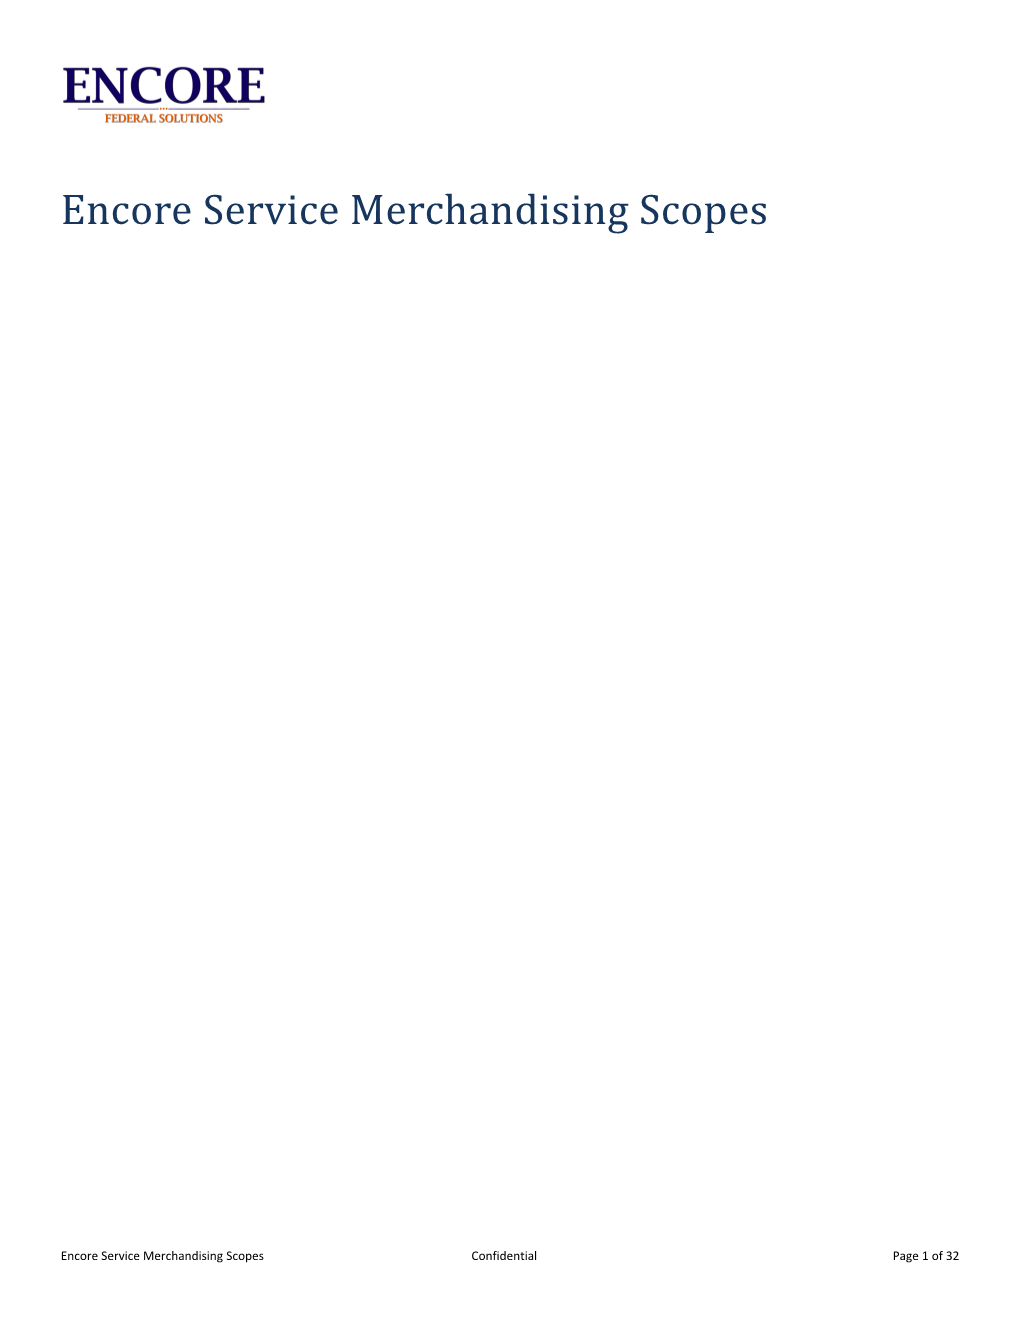 Encore Service Merchandising Scopes